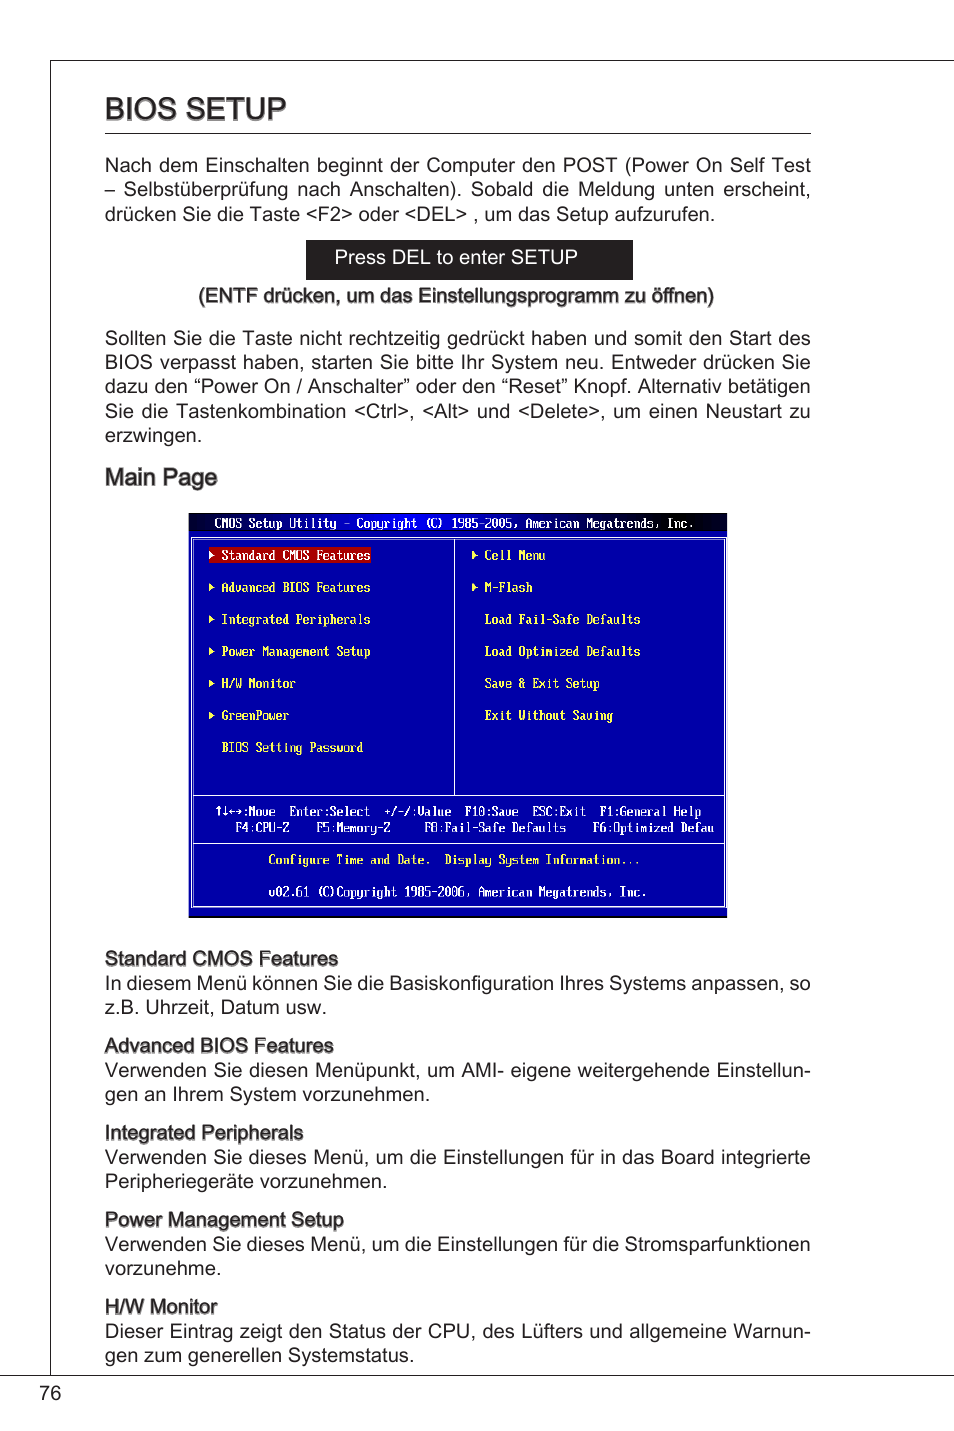 Bios setup | MSI G41M-P34 User Manual | Page 76 / 153 | Original mode